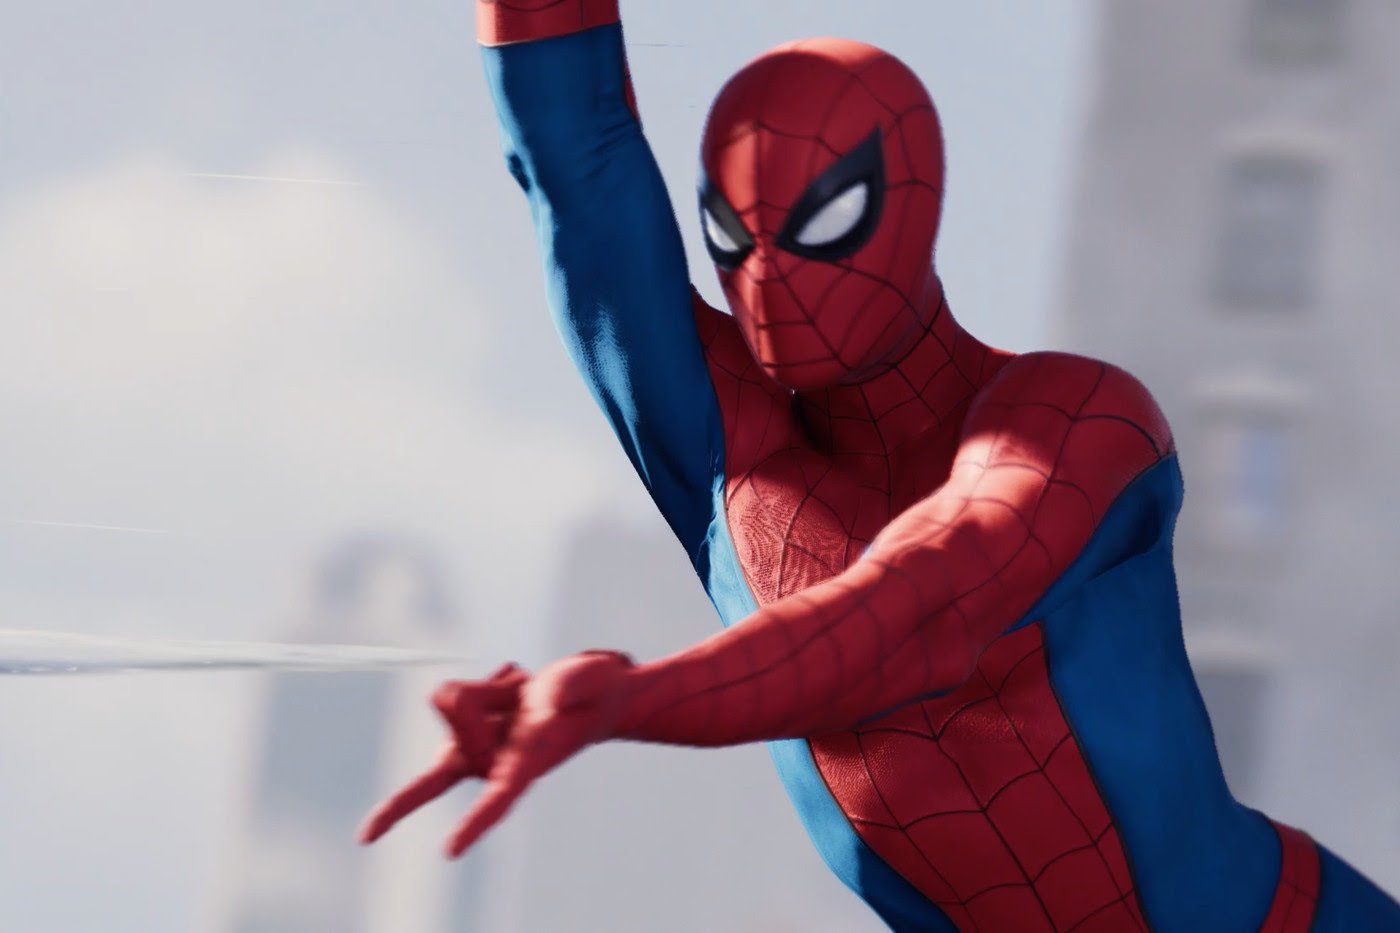 Spider-Man swinging through New York is always iconic. Pic courtesy: polygon.com